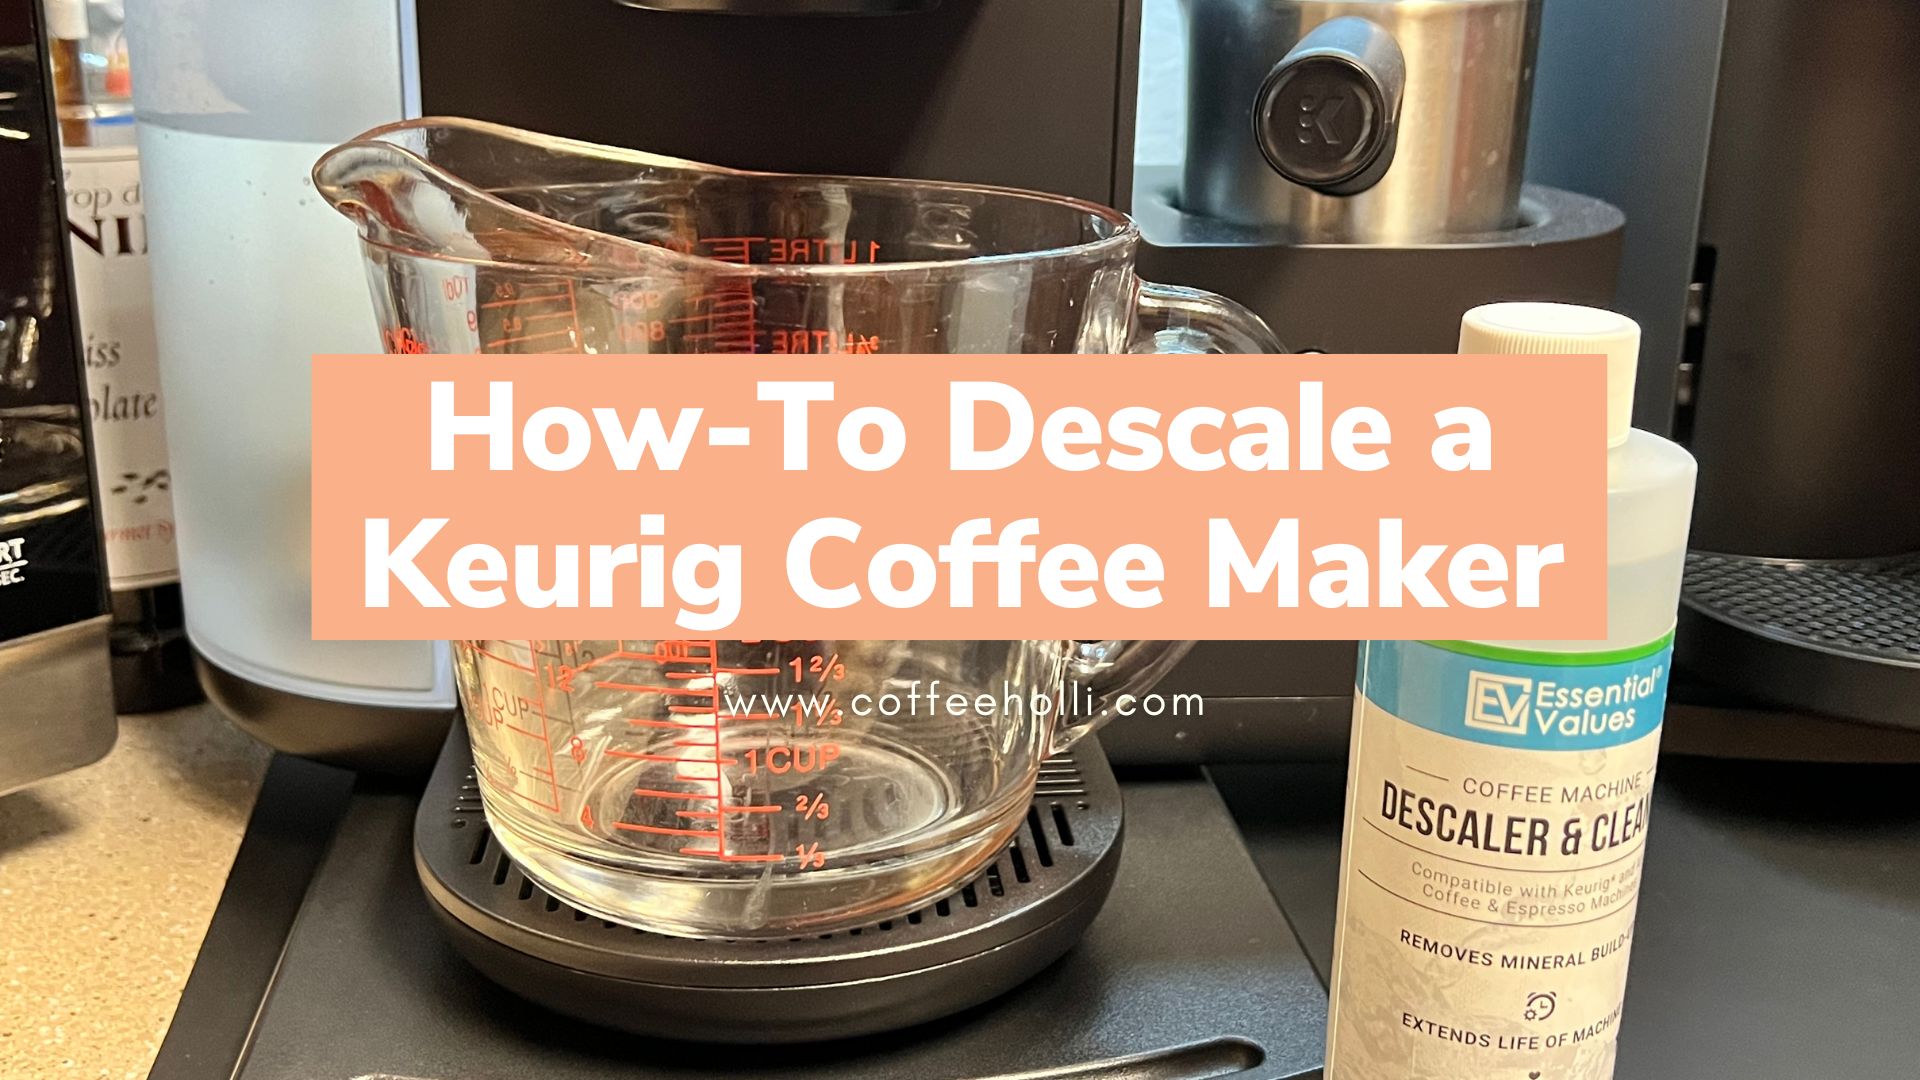 How-To Descale a Keurig Coffee Maker